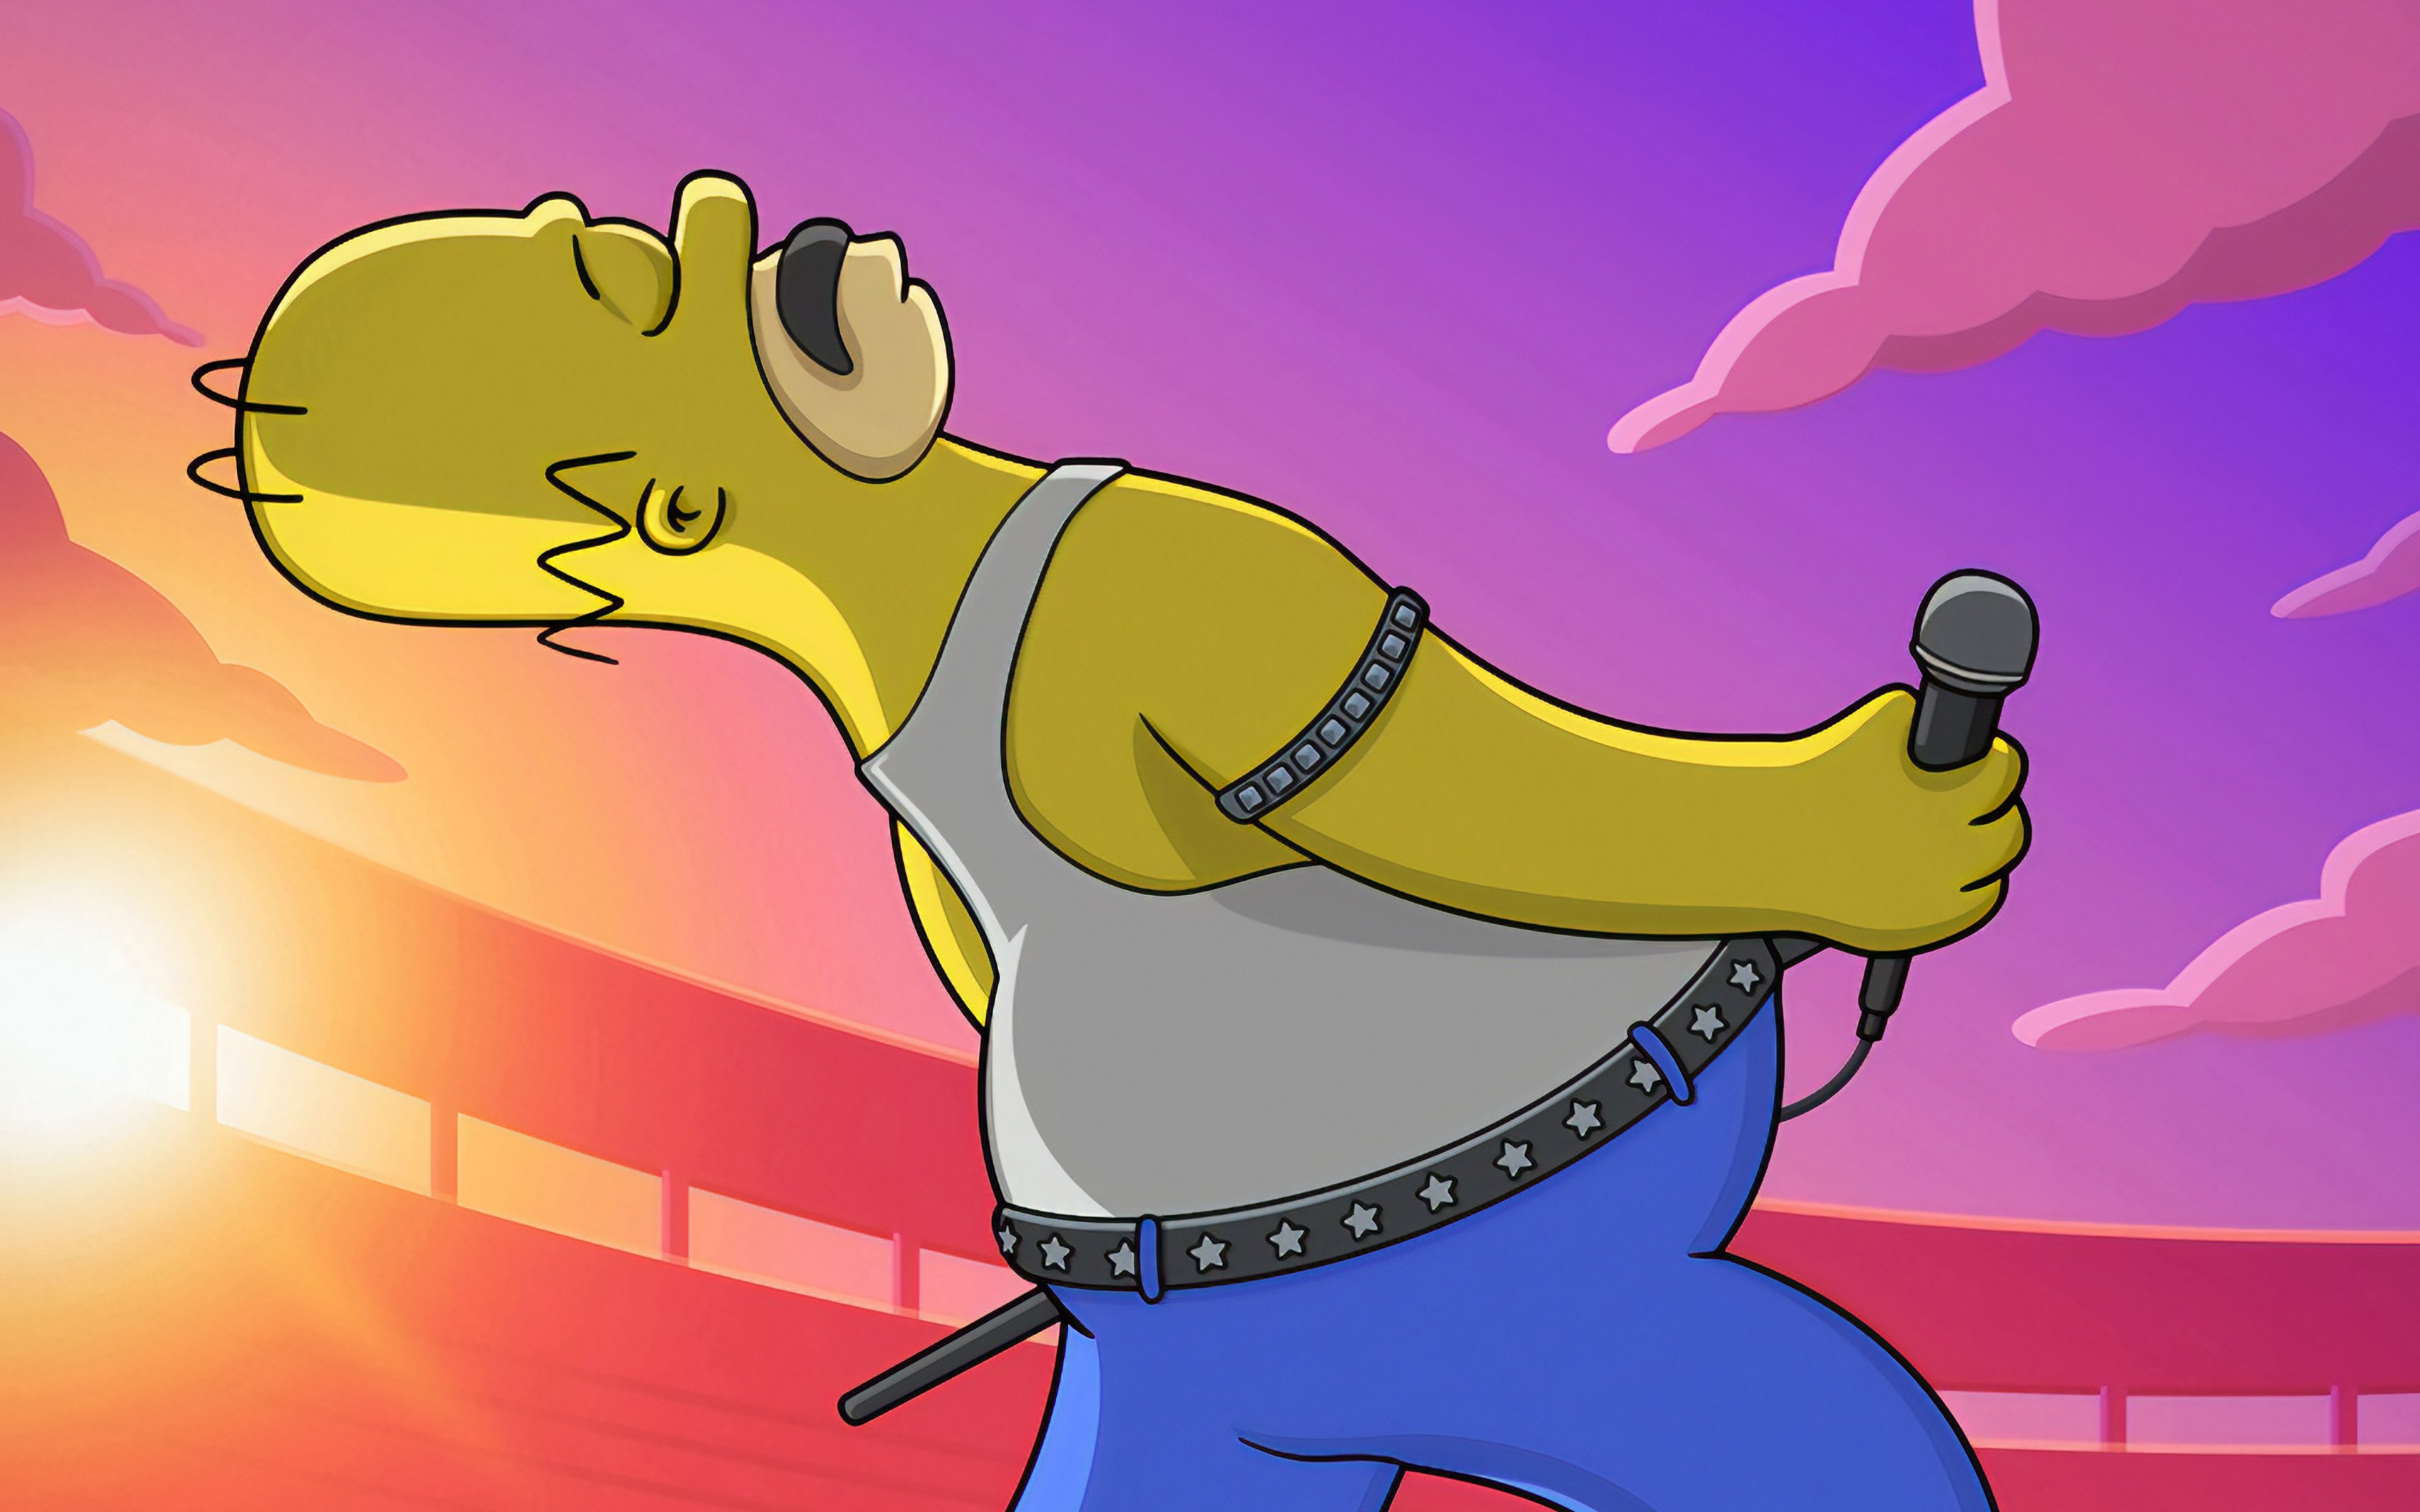 Fondos de pantalla Homero Simpson como Freddy Mercury